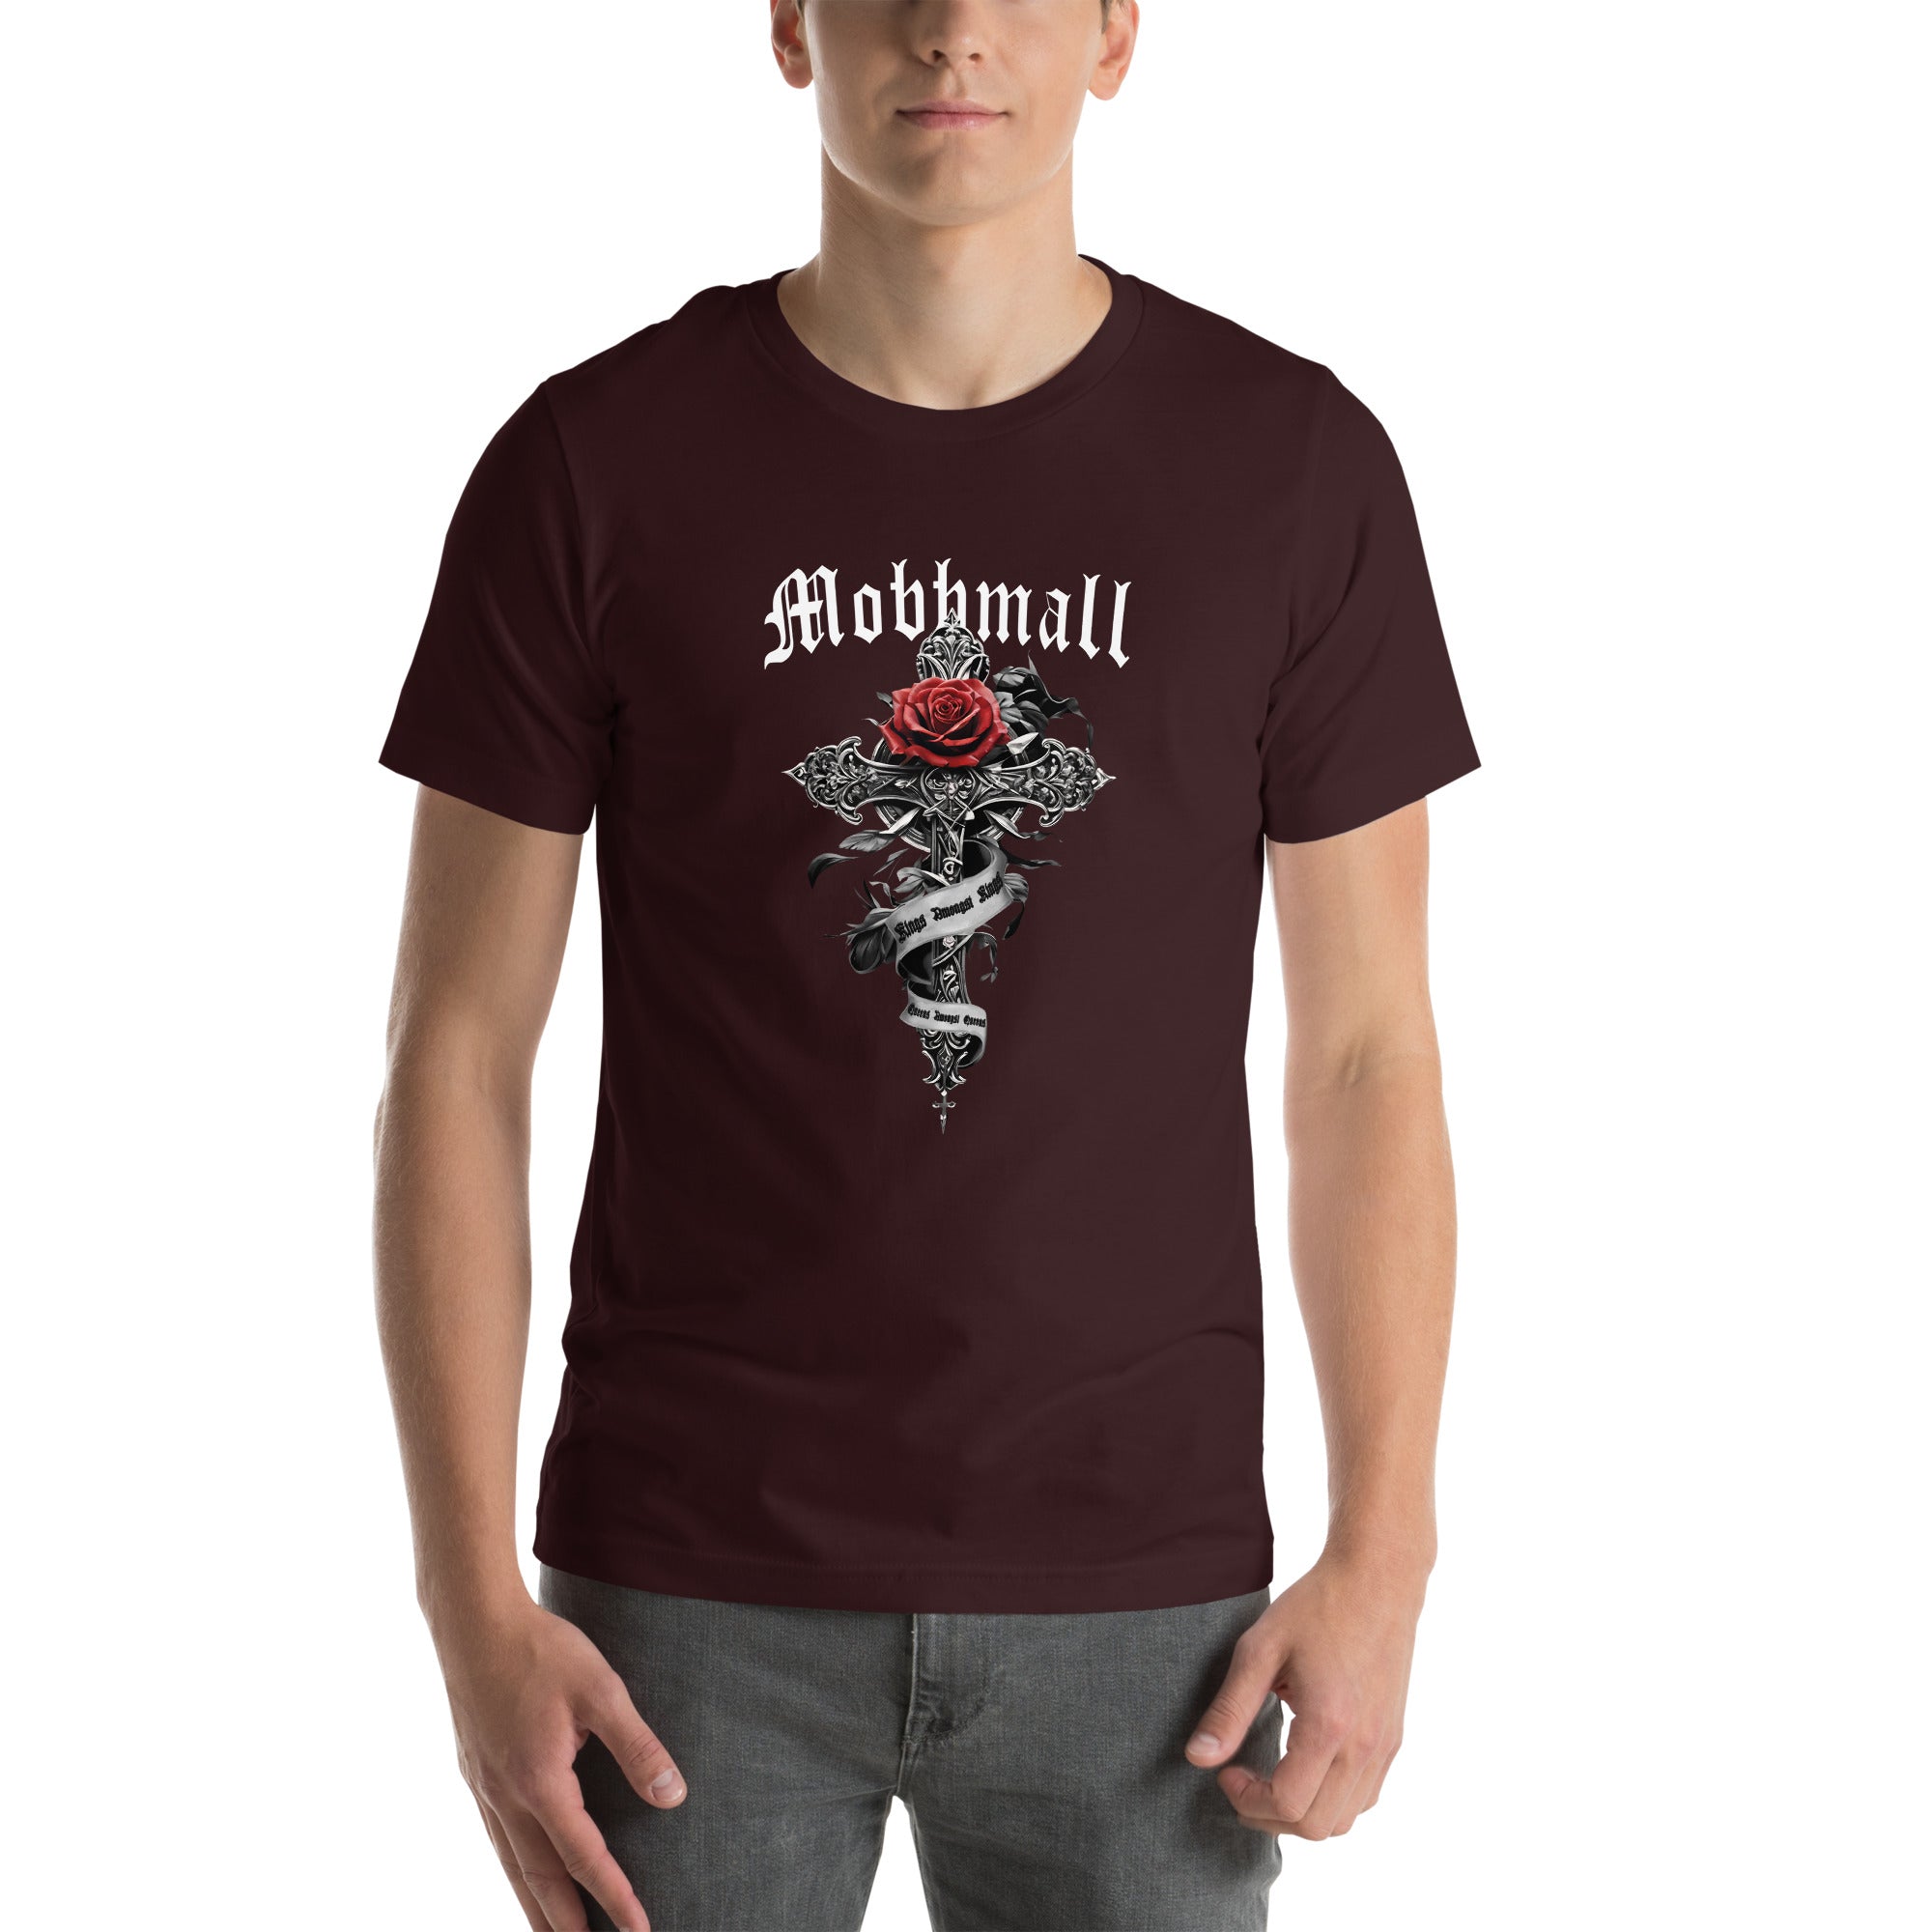 MobbMall's Cross Unisex t-shirt